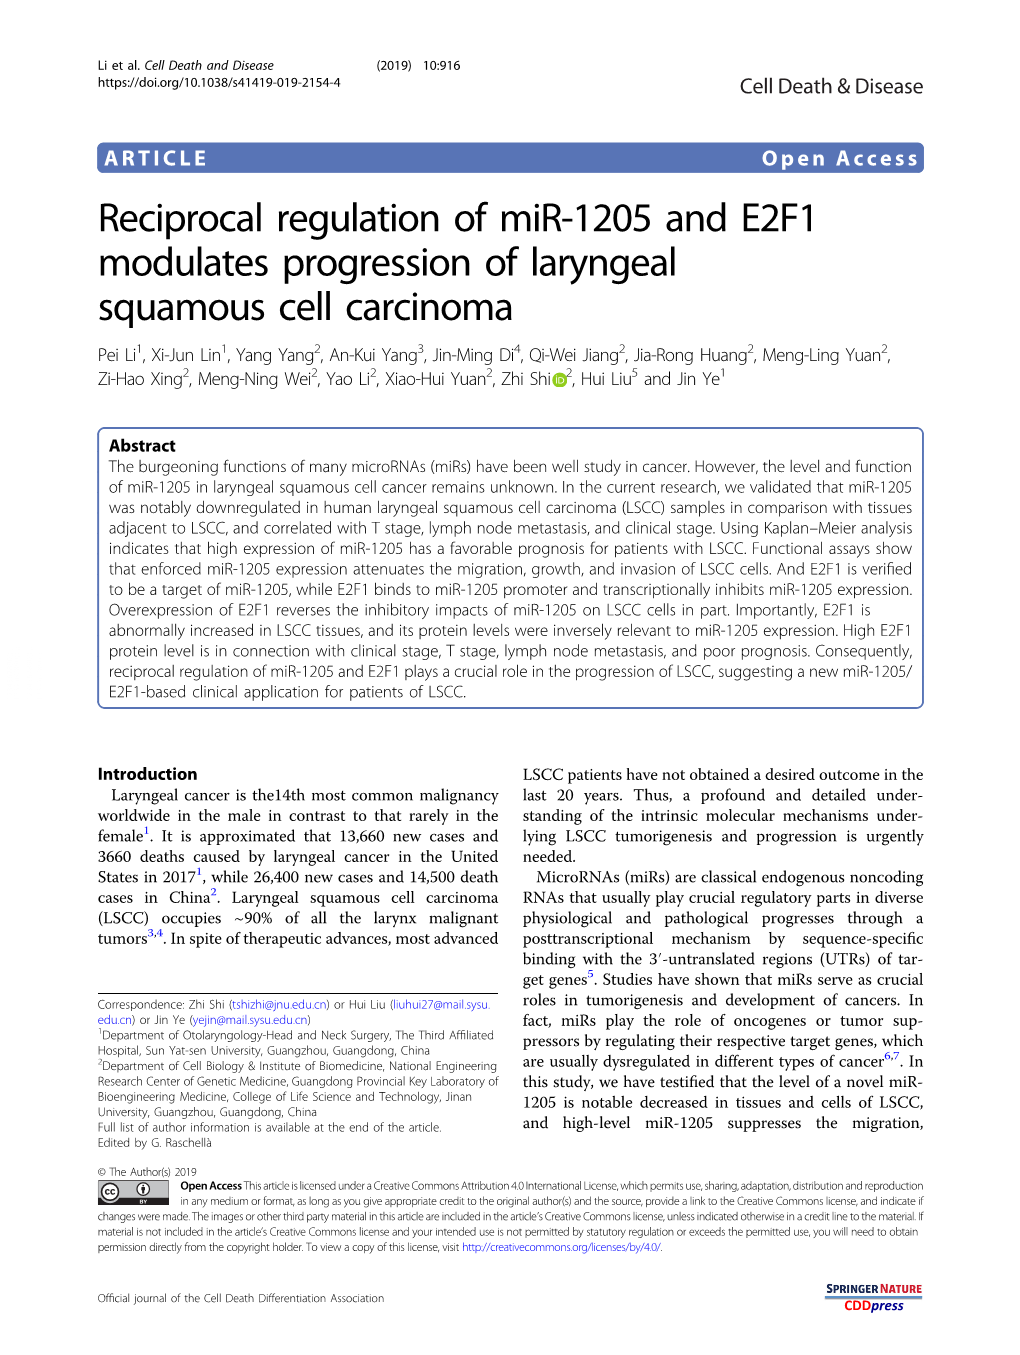 Reciprocal Regulation of Mir-1205 and E2F1 Modulates Progression Of